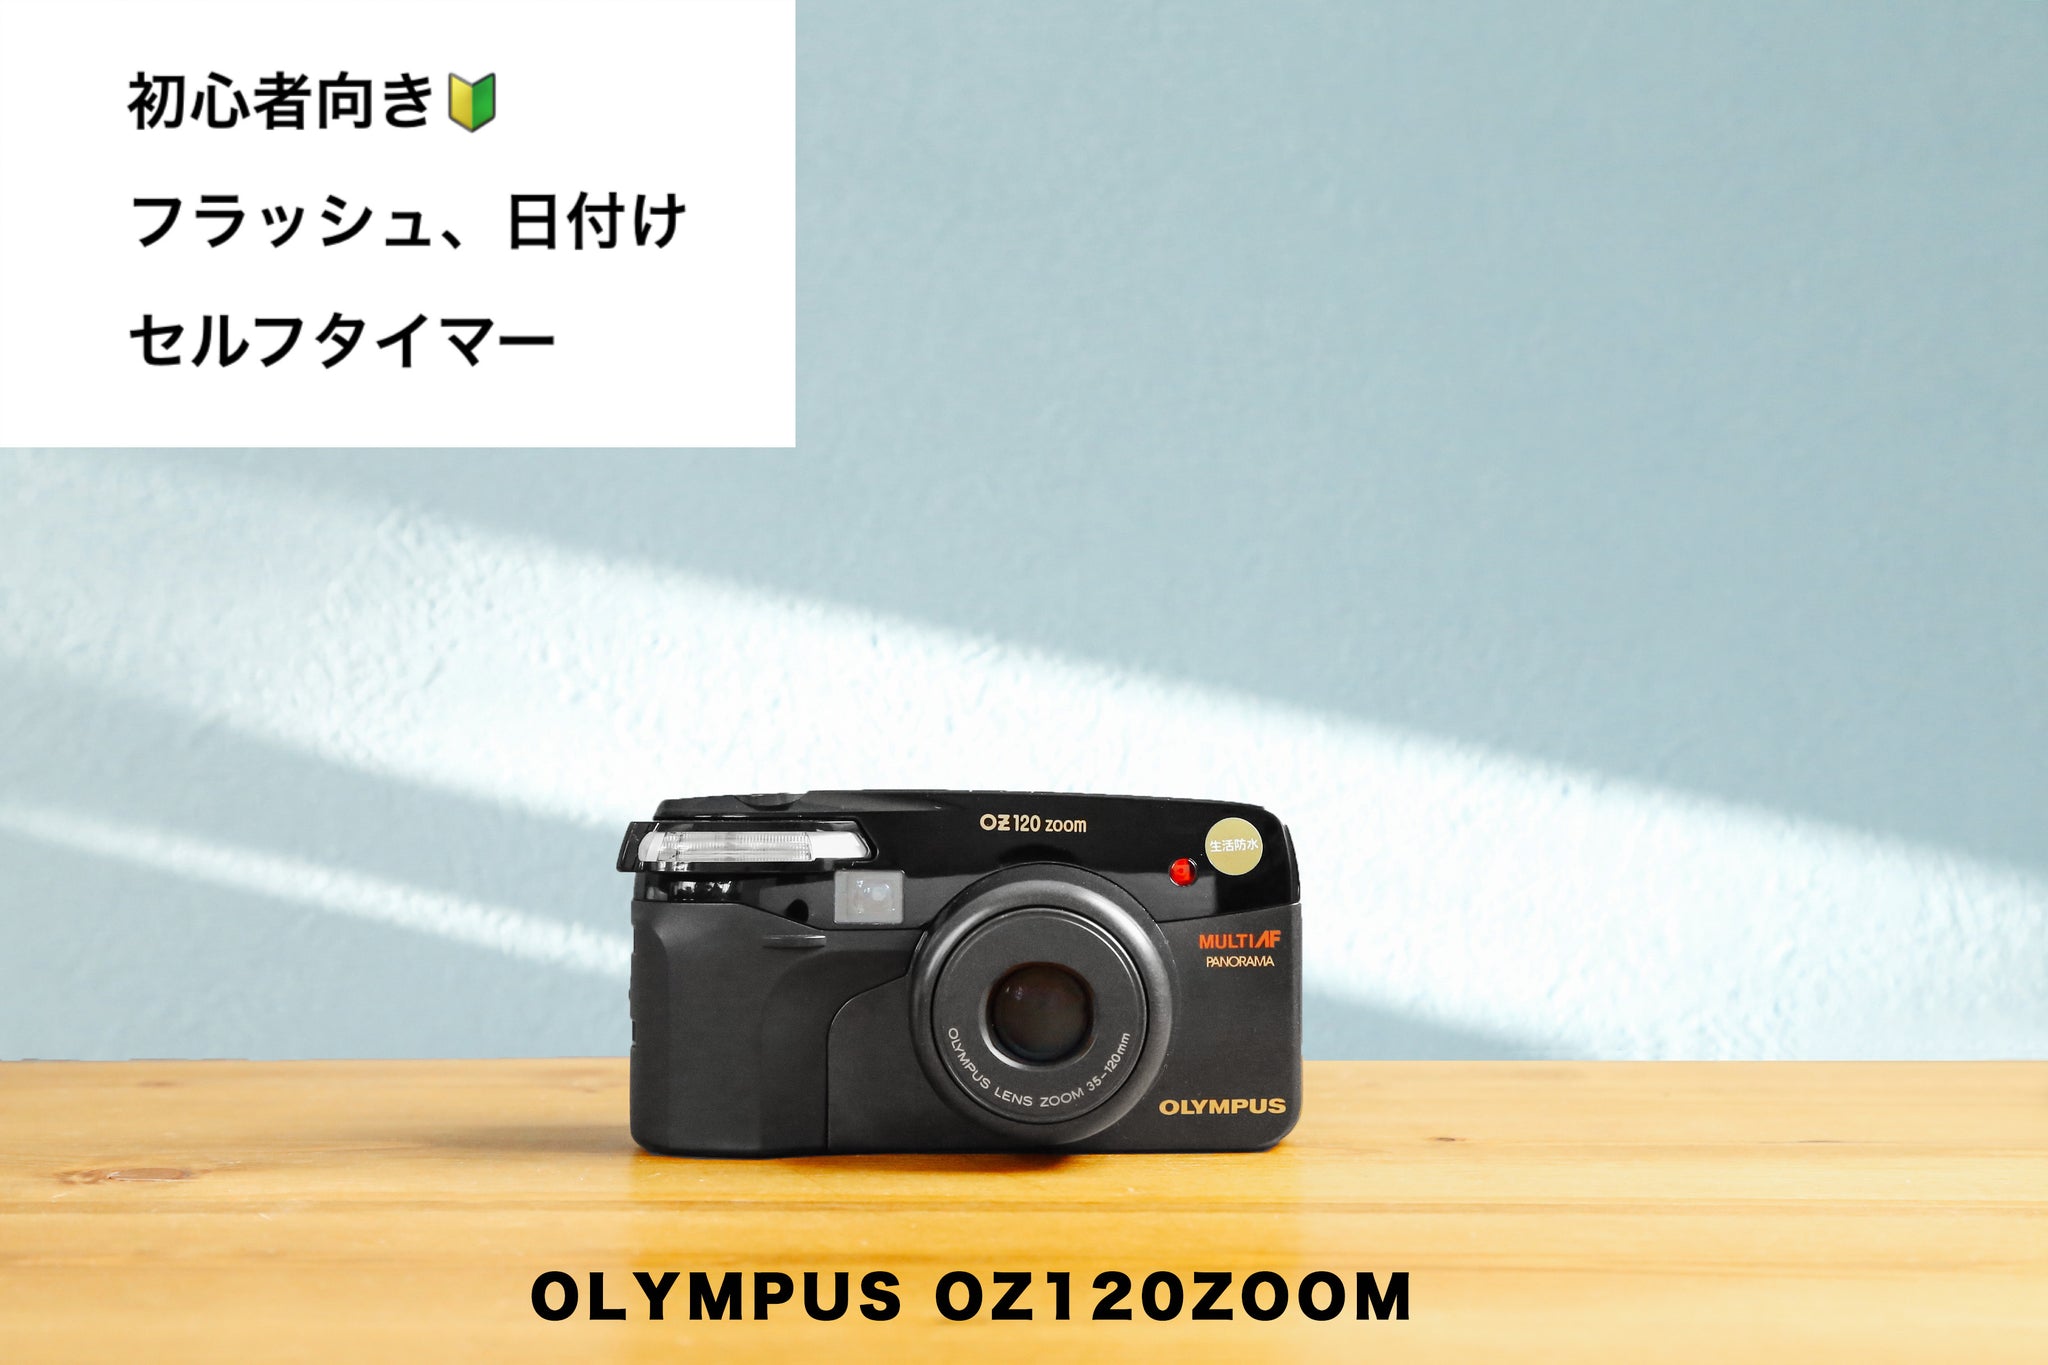 完動品/生活防水 OLYMPUS OZ 120 ZOOM